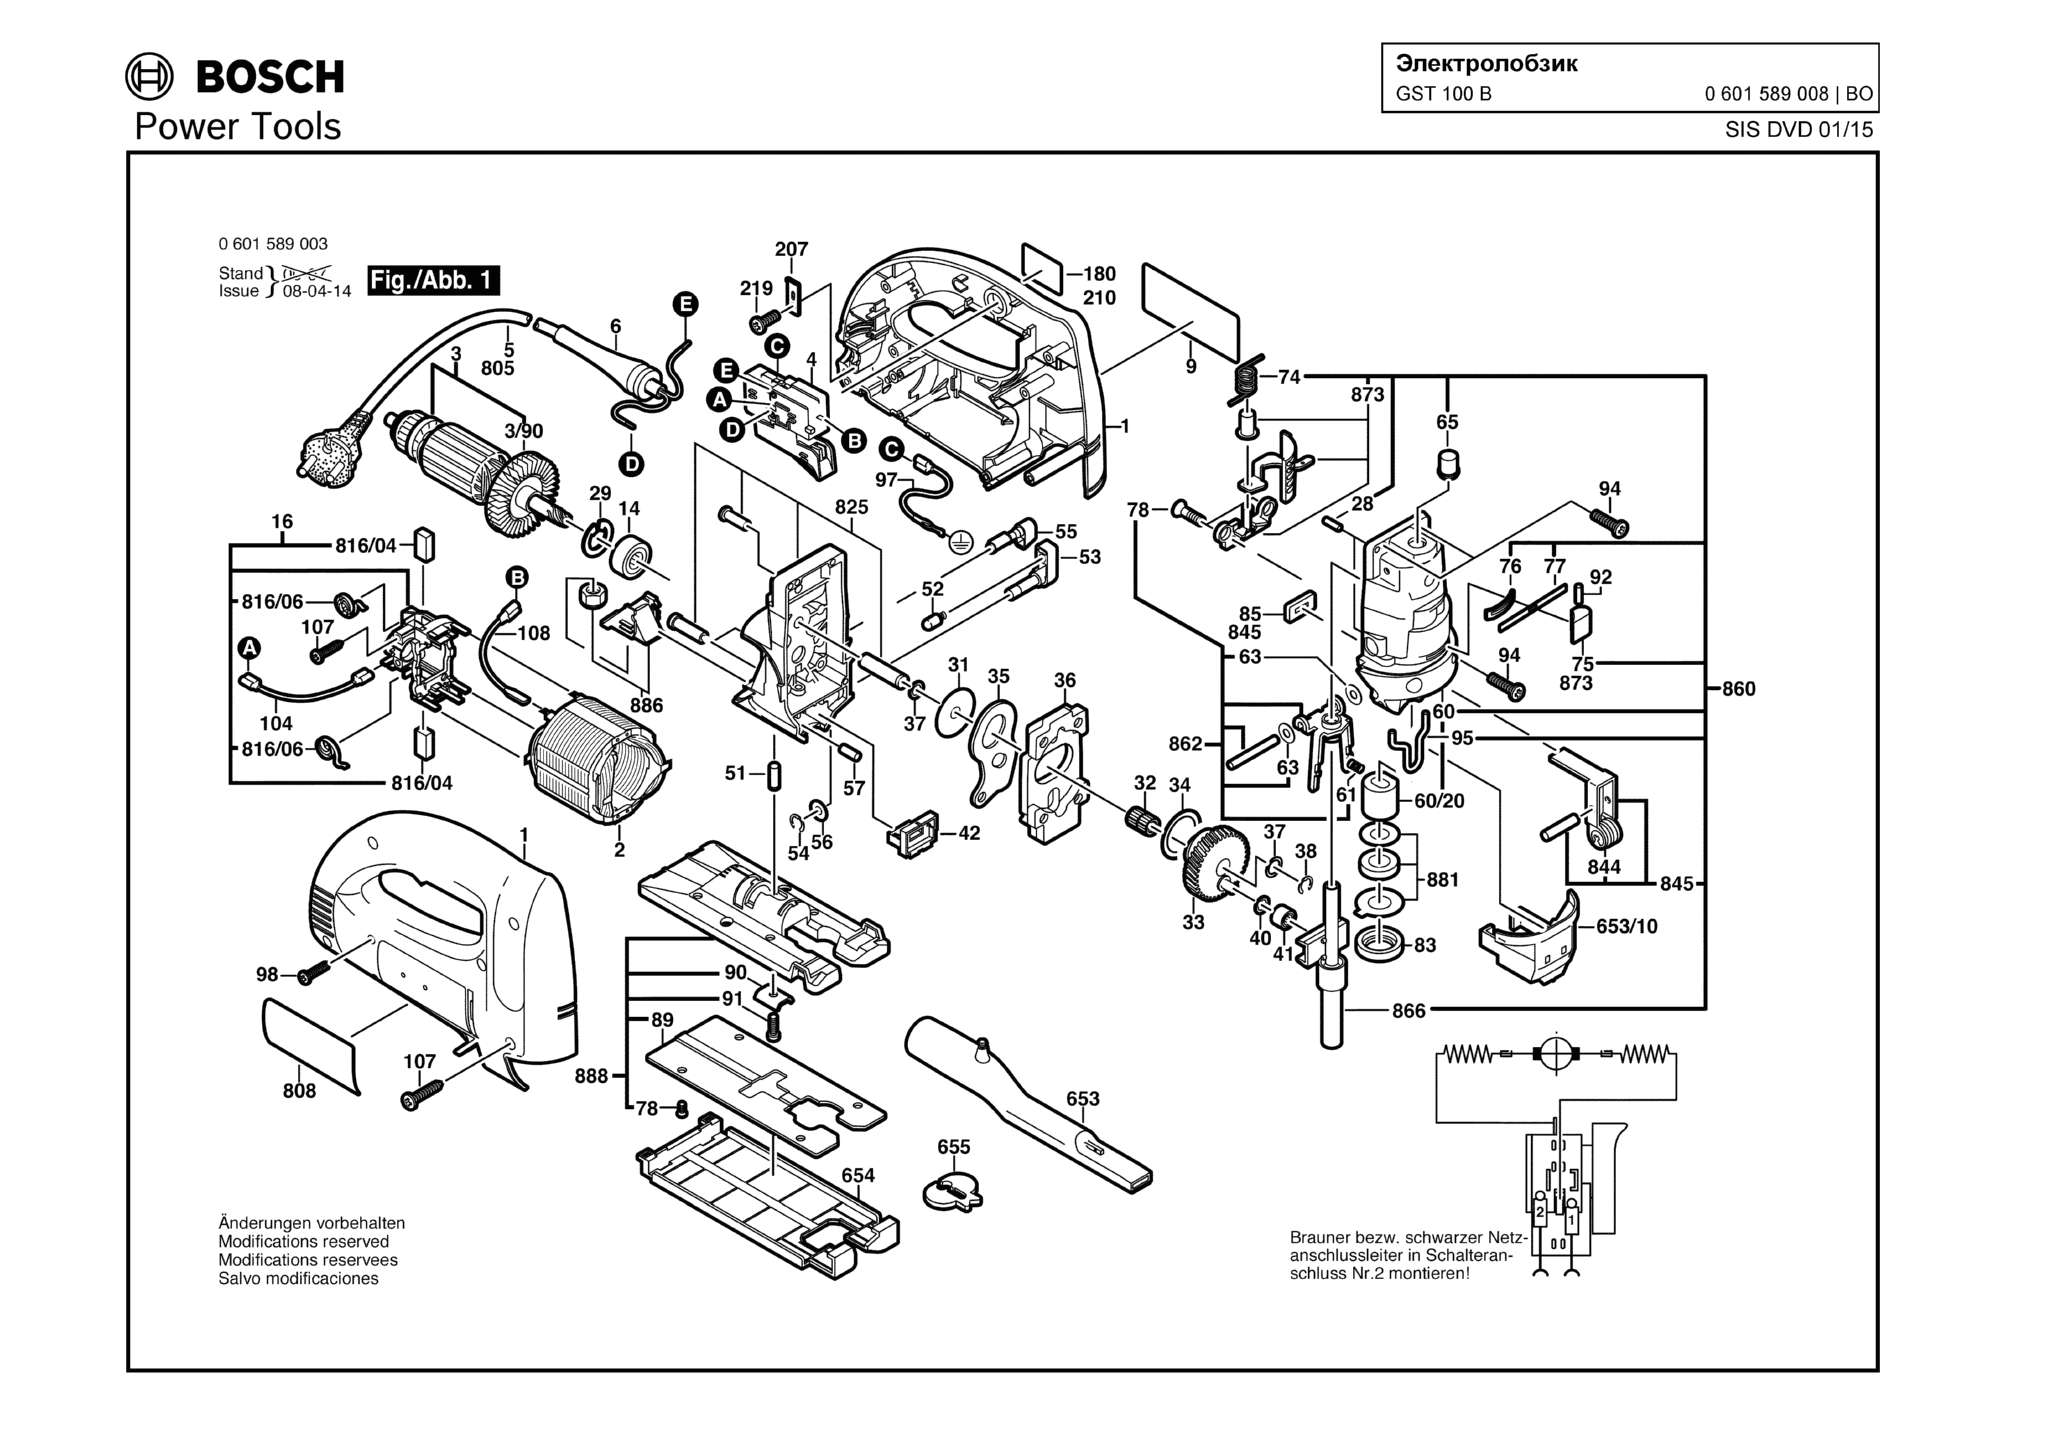 Запчасти, схема и деталировка Bosch GST 100 B (ТИП 0601589008)